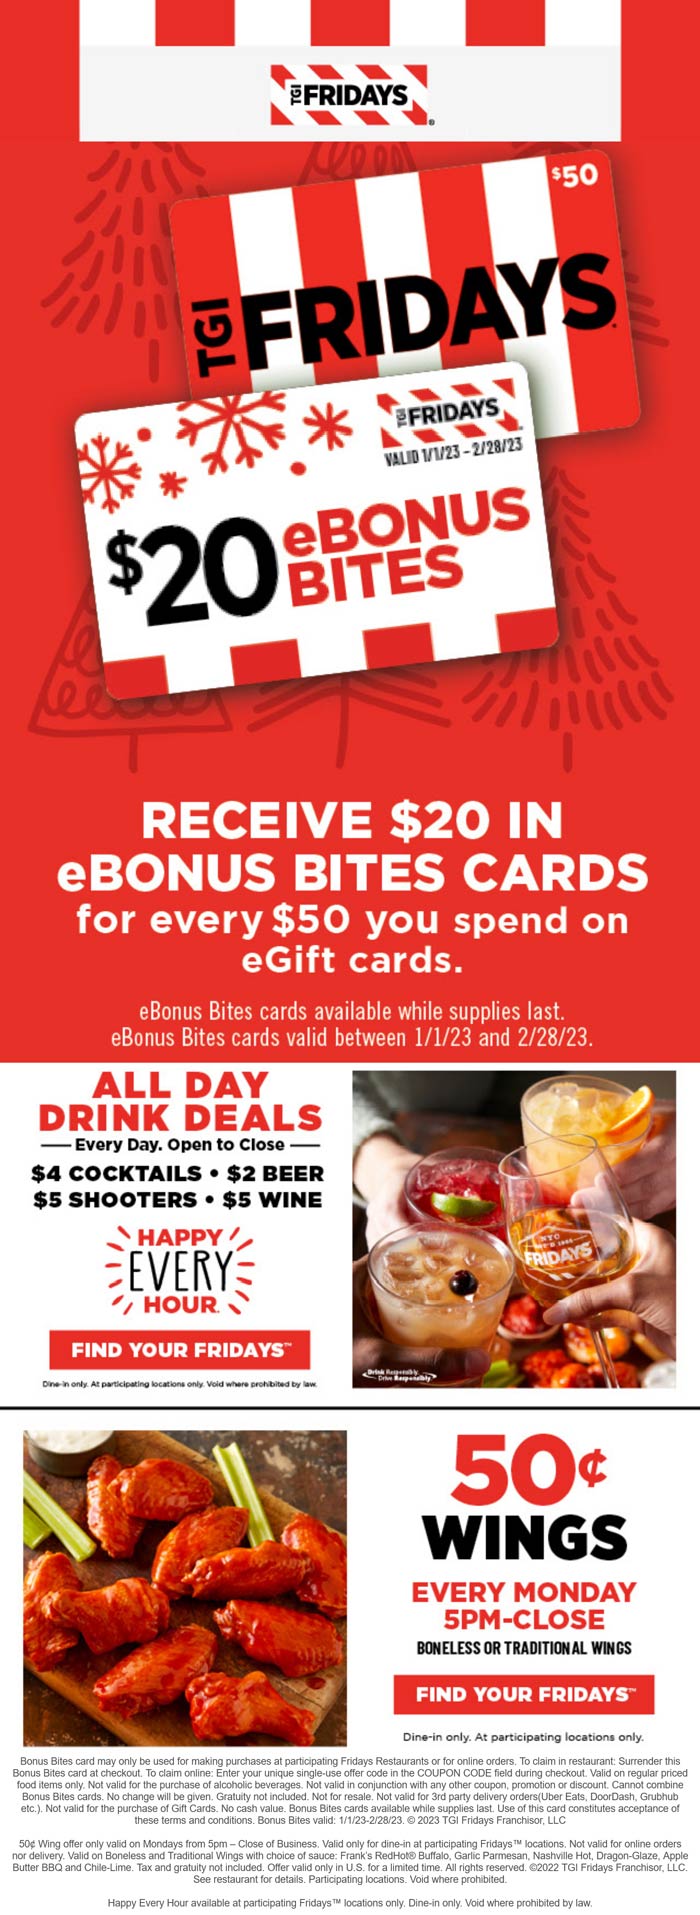 TGI Fridays restaurants Coupon  $20 card free on $50 card today at TGI Fridays restaurants #tgifridays 